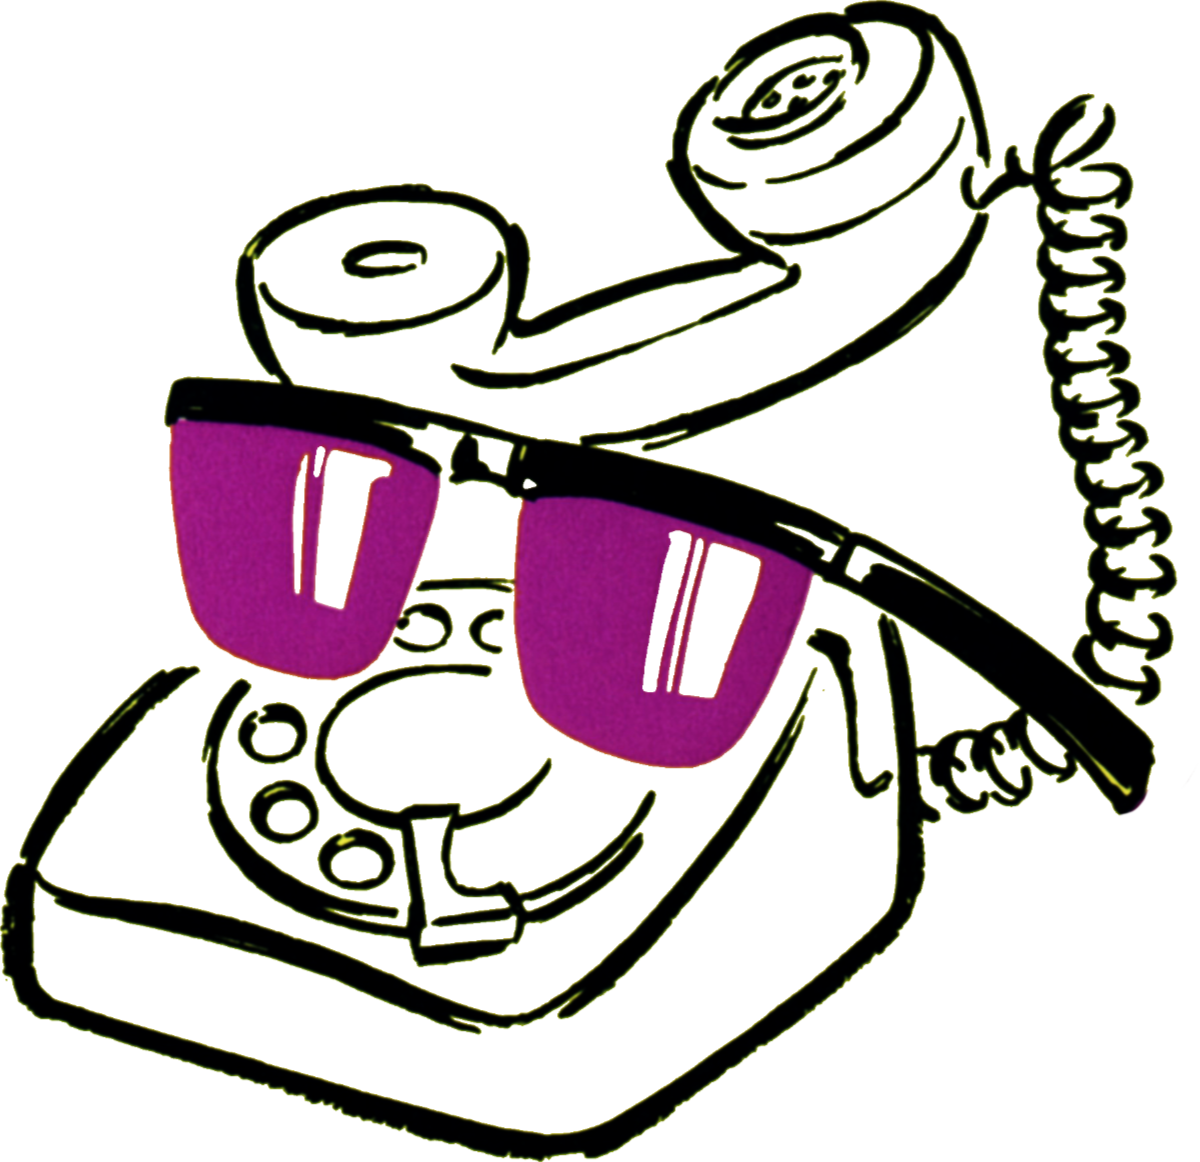 Cartoon of a telephone wearing sunglasses